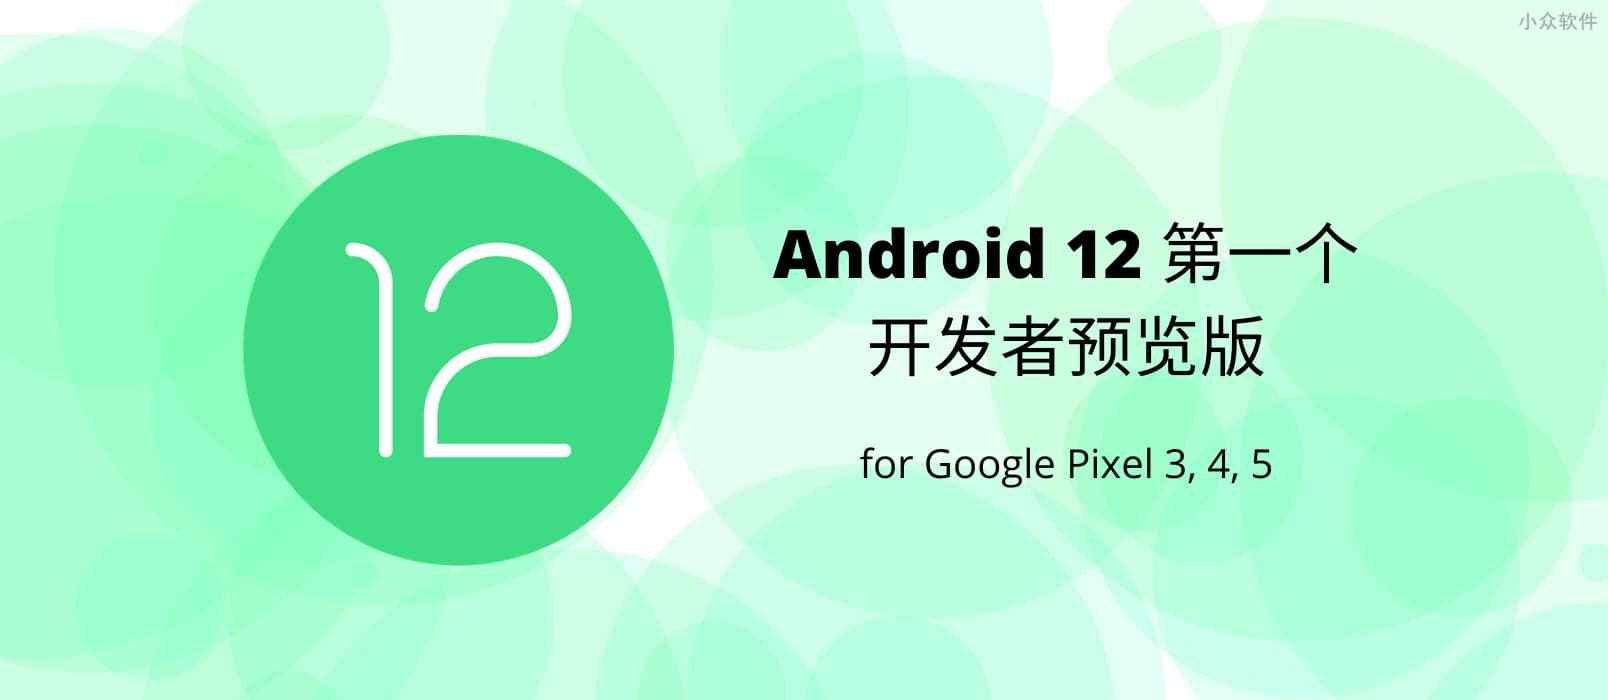 Android 12 第一个开发者预览版已经可以下载了，支持 Pixel 3 以上设备